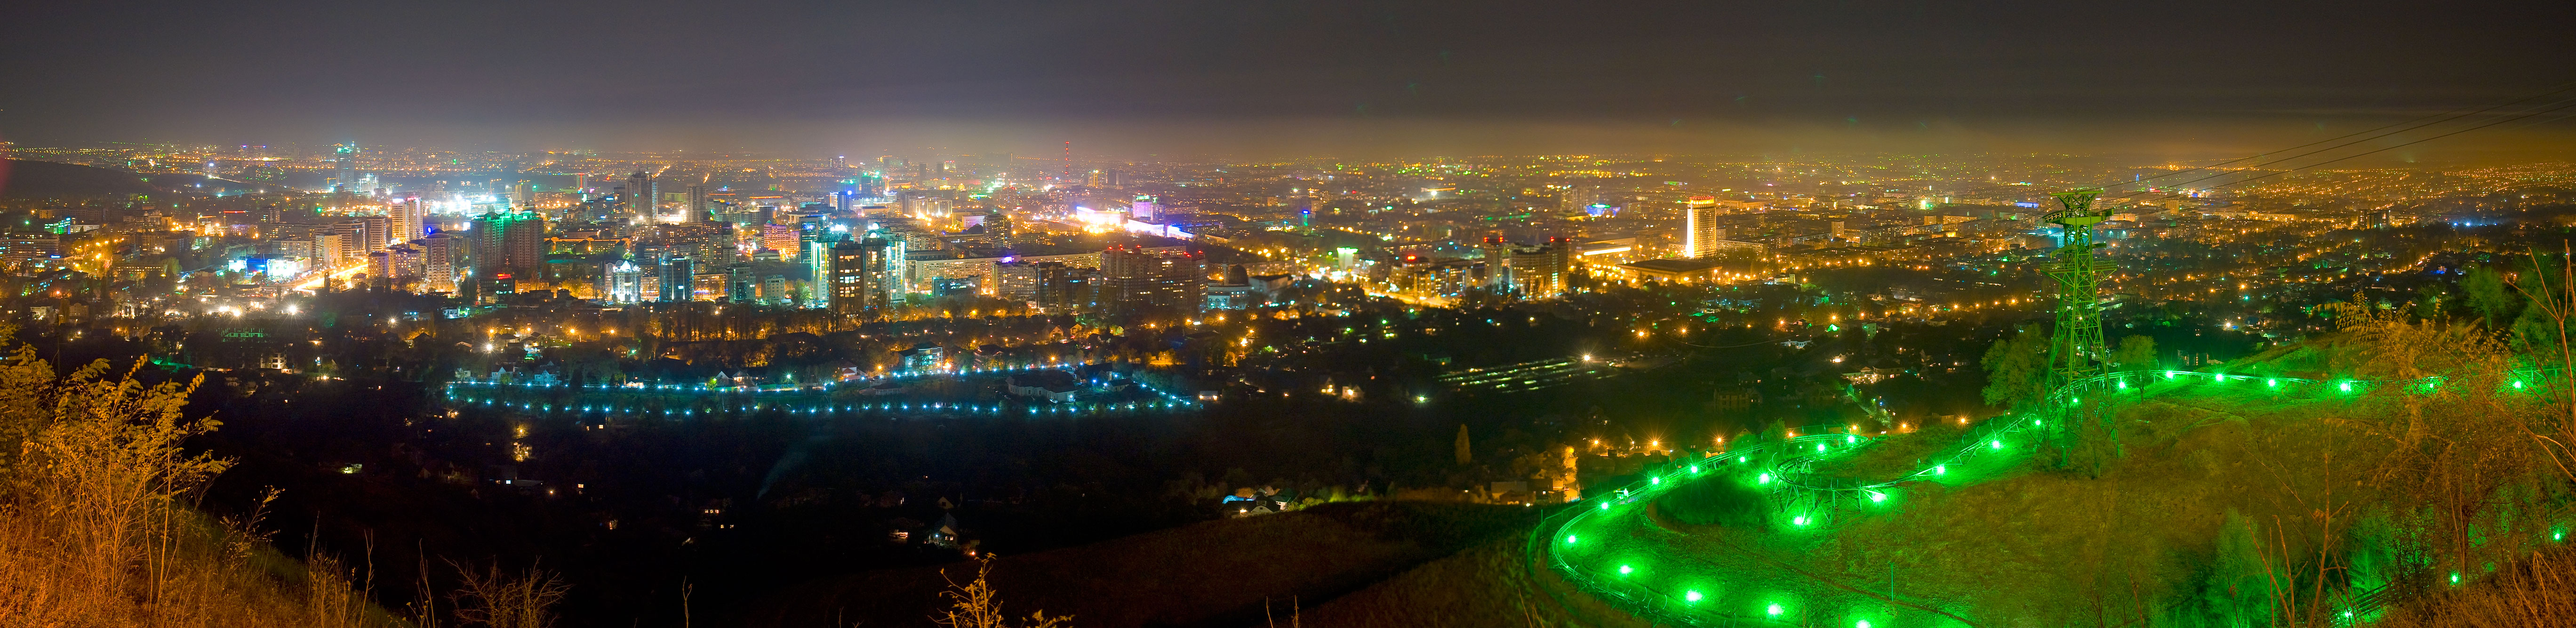 Ночной Ташкент панорама